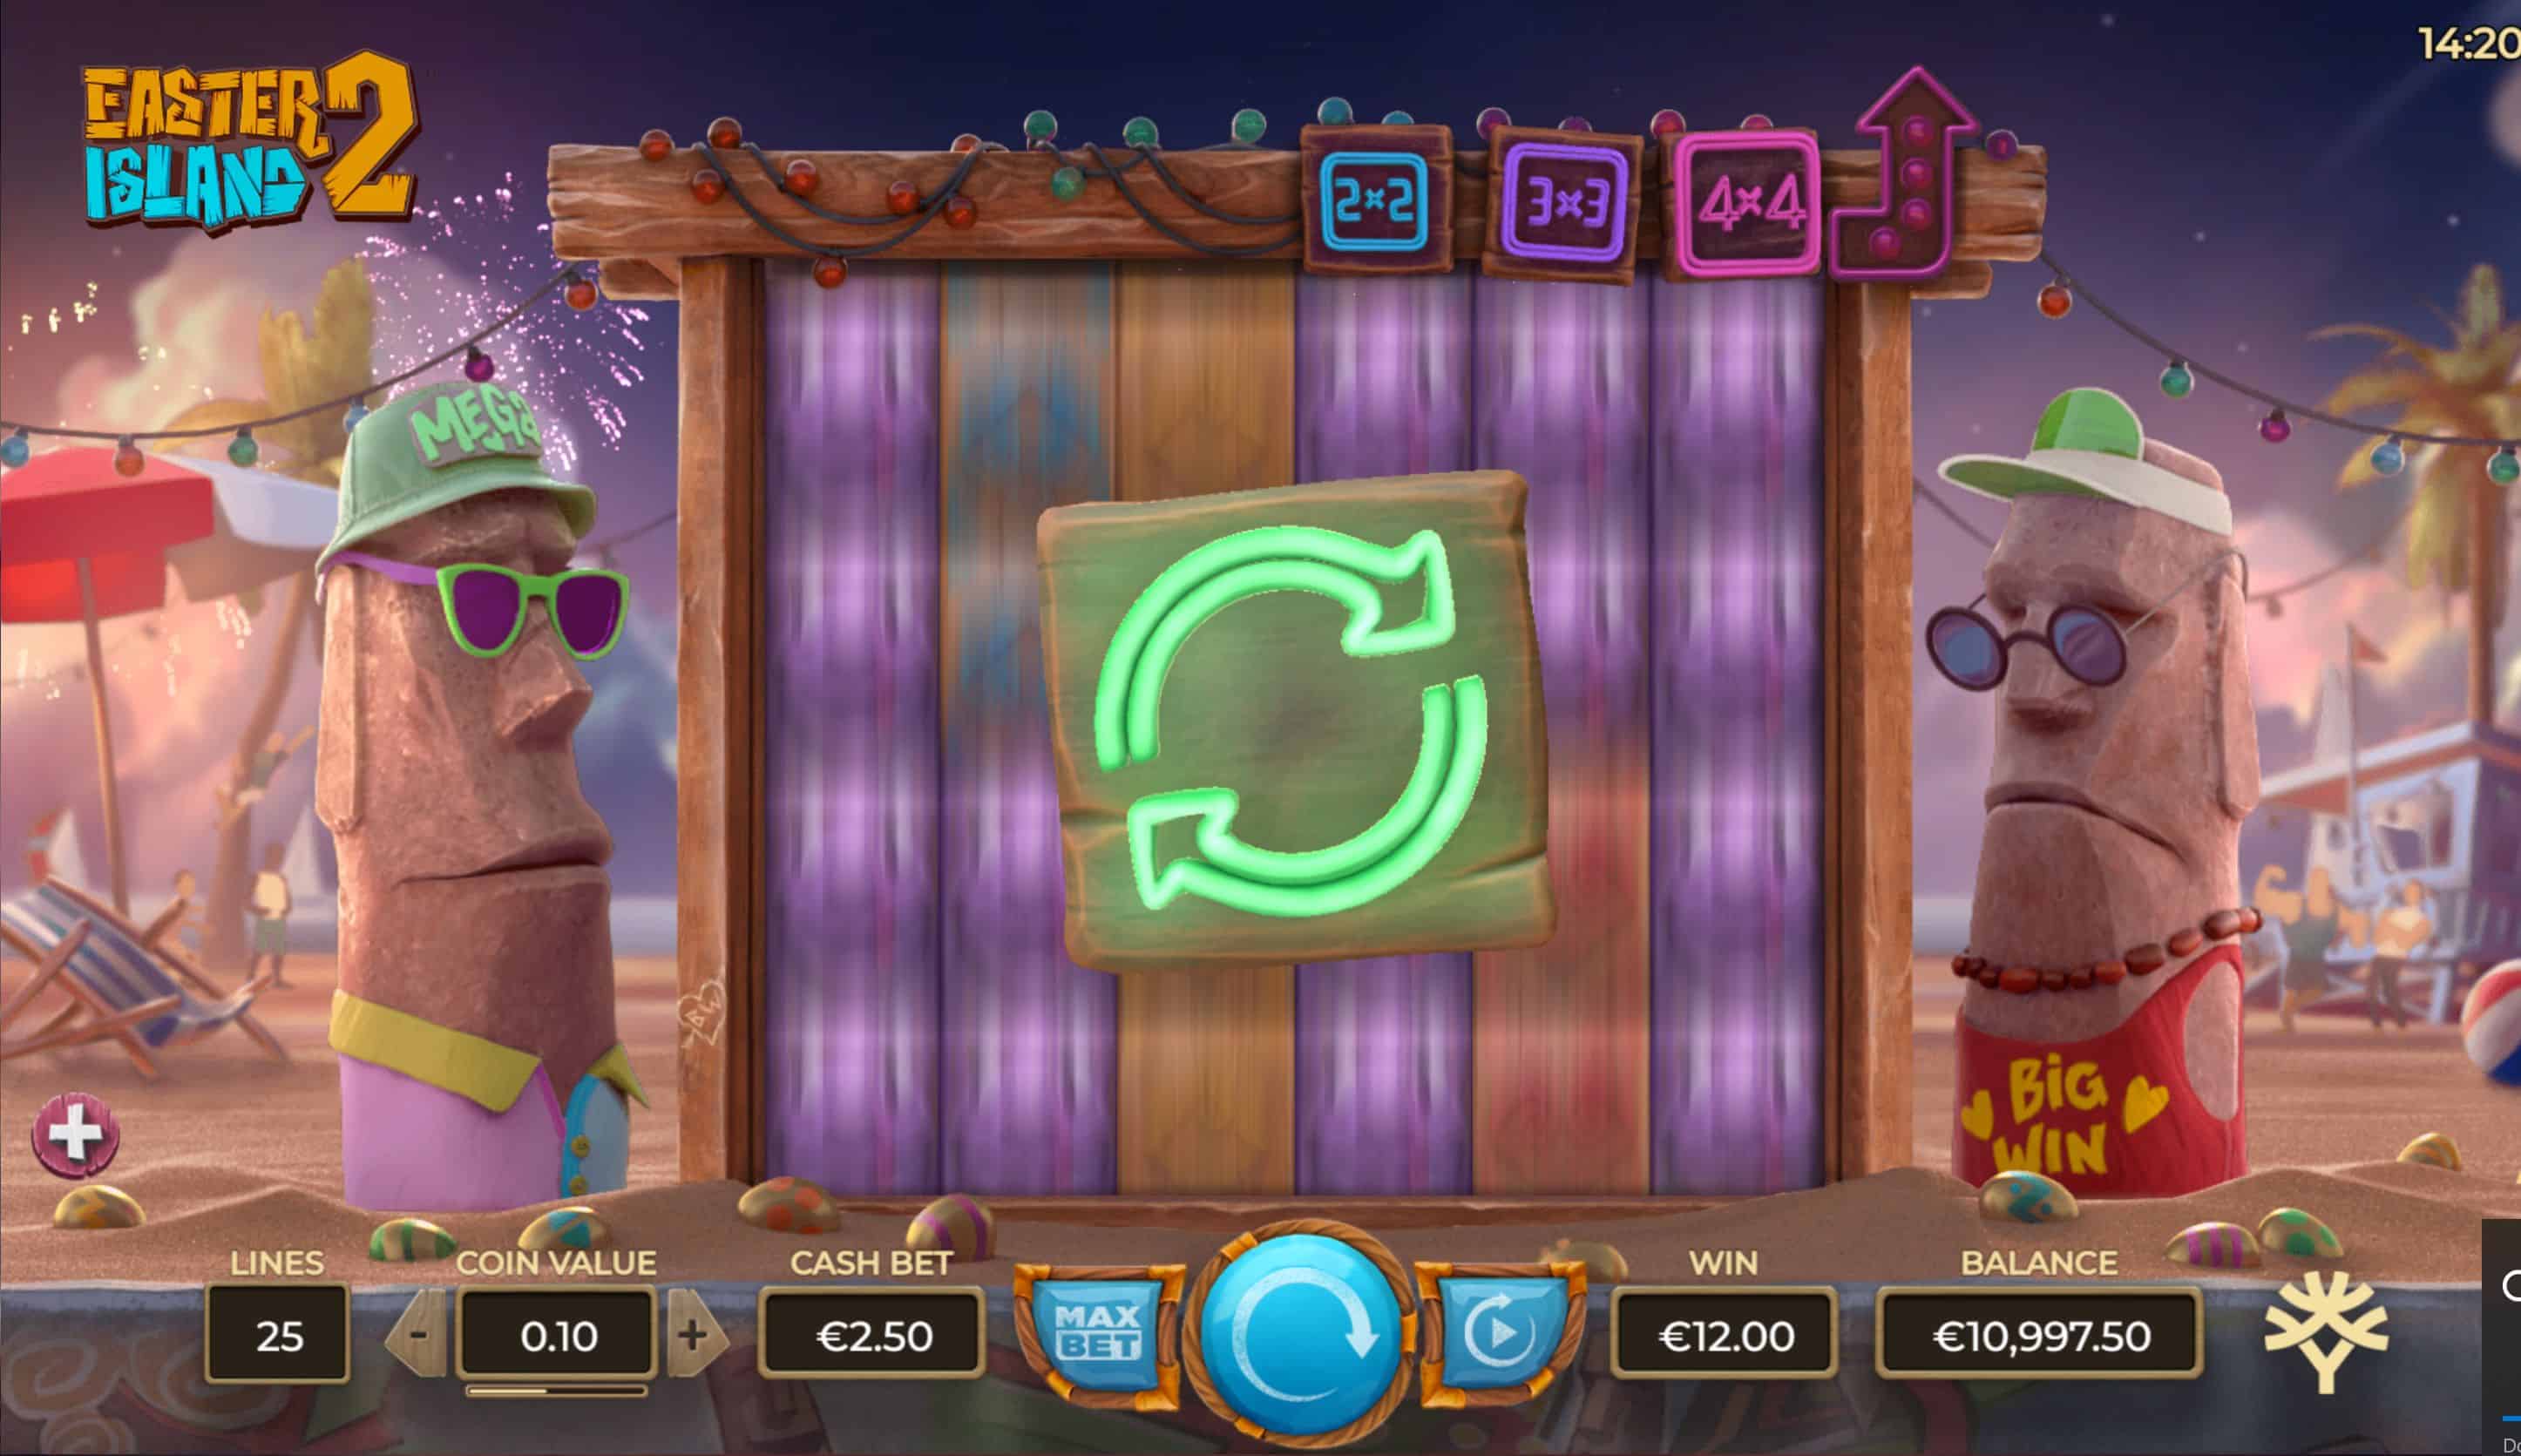 Easter Island 2 Slot Game Free Play at Casino Ireland 01